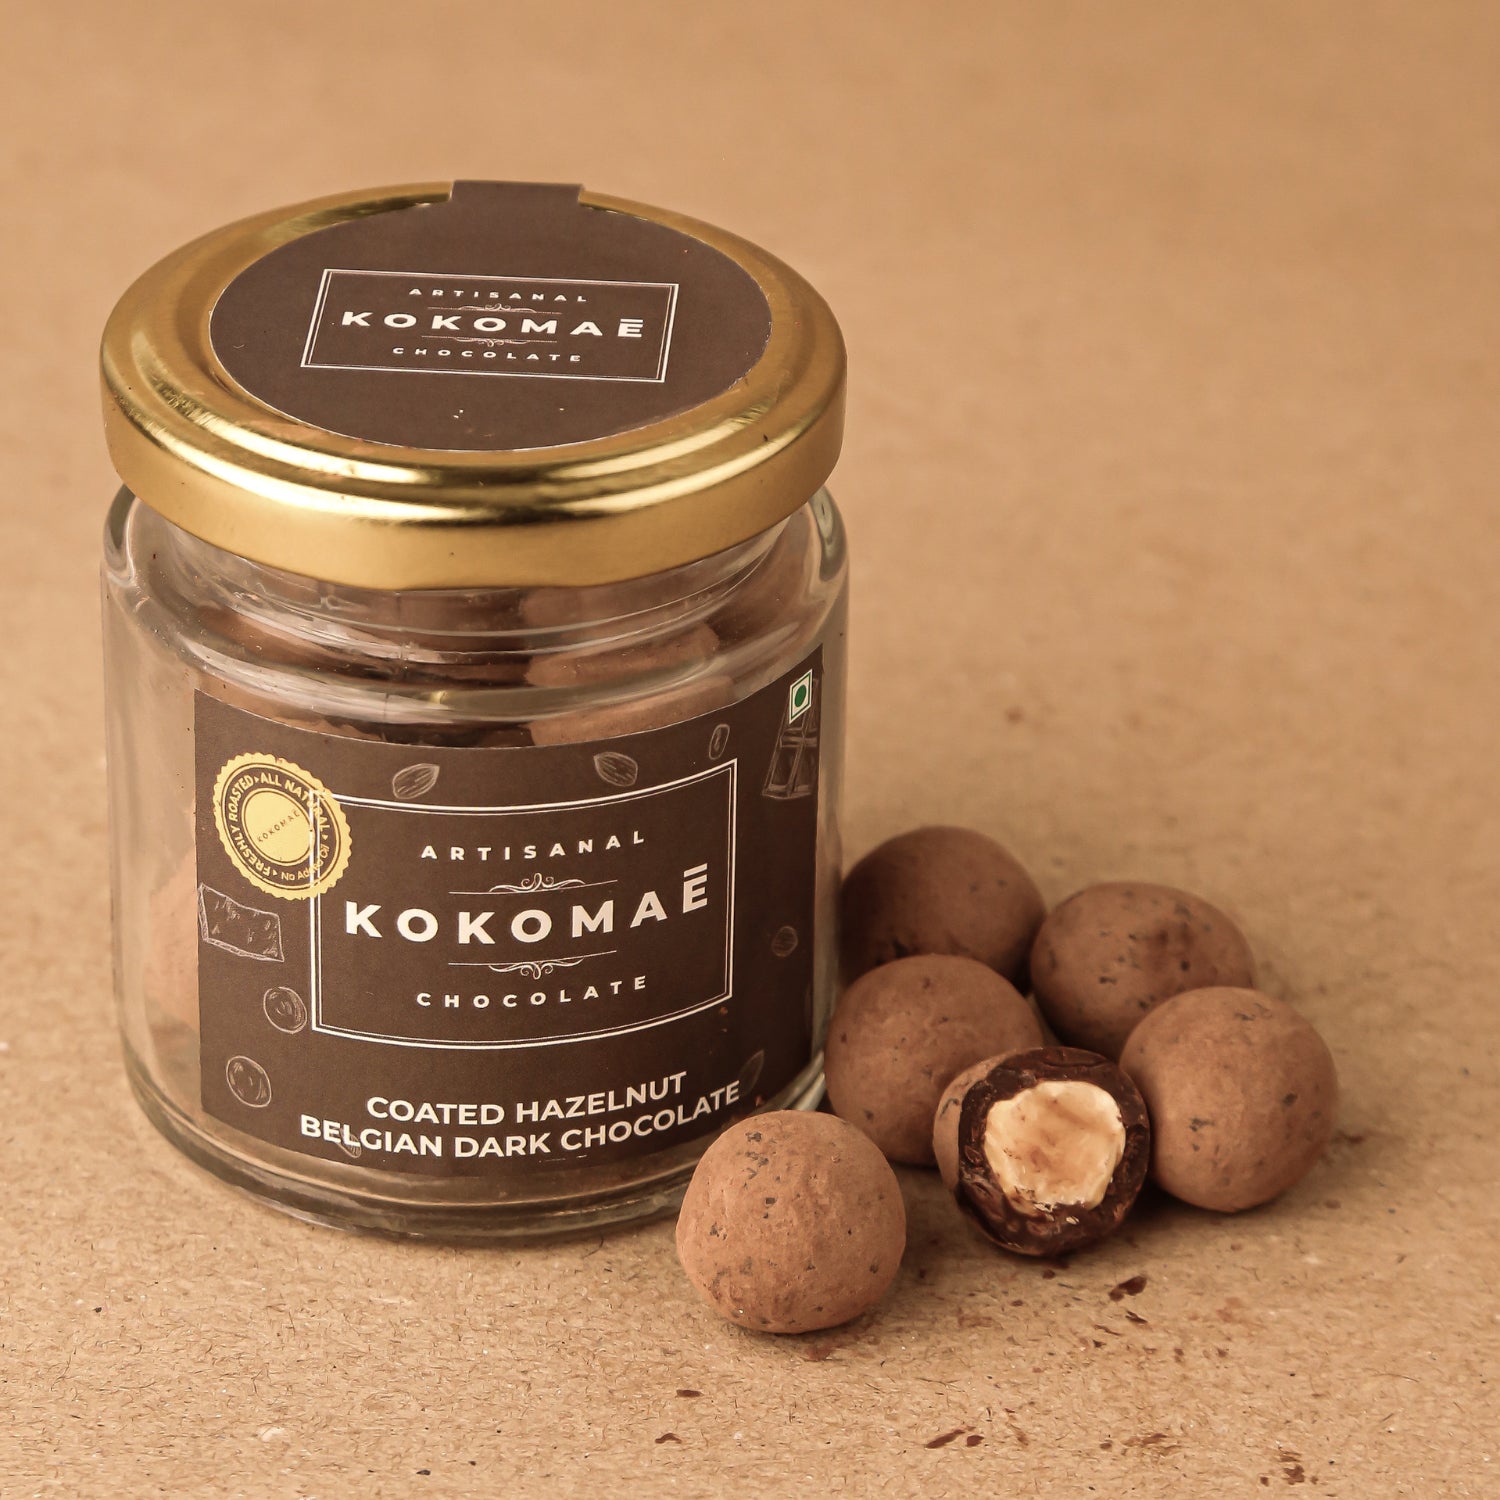 Kokomaē Hazelnut Belgian Dark Chocolate Coated Dragees with Crunchy Hazelnut Nuts In Finest Couverture